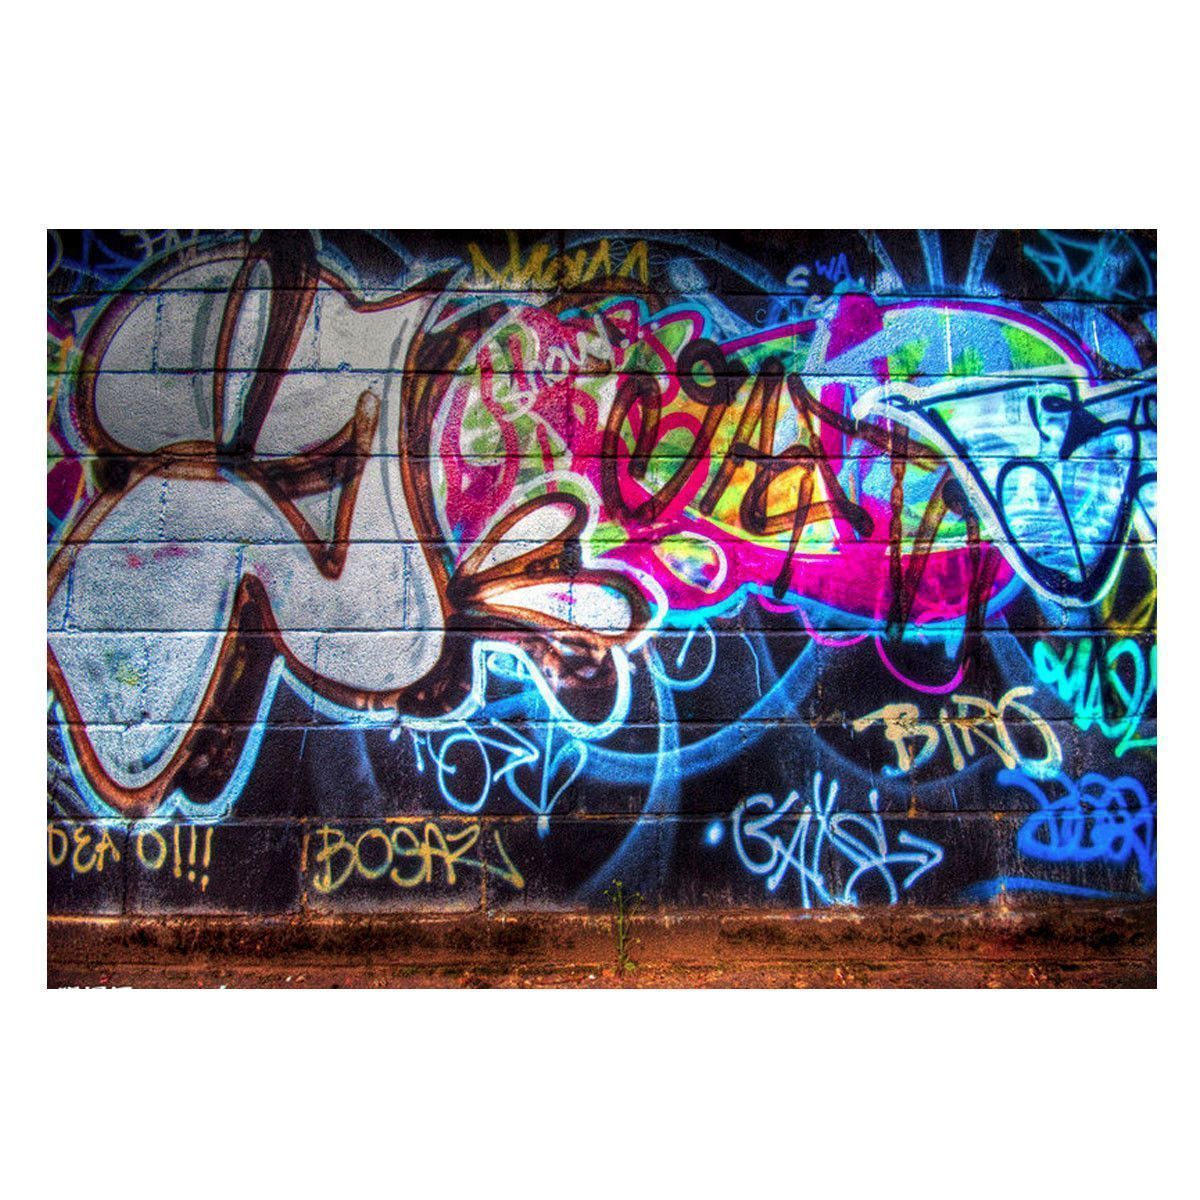 5x3FT-Graffiti-Wall-Theme-Photography-Background-Photo-Backdrop-Studio-Props-1158274